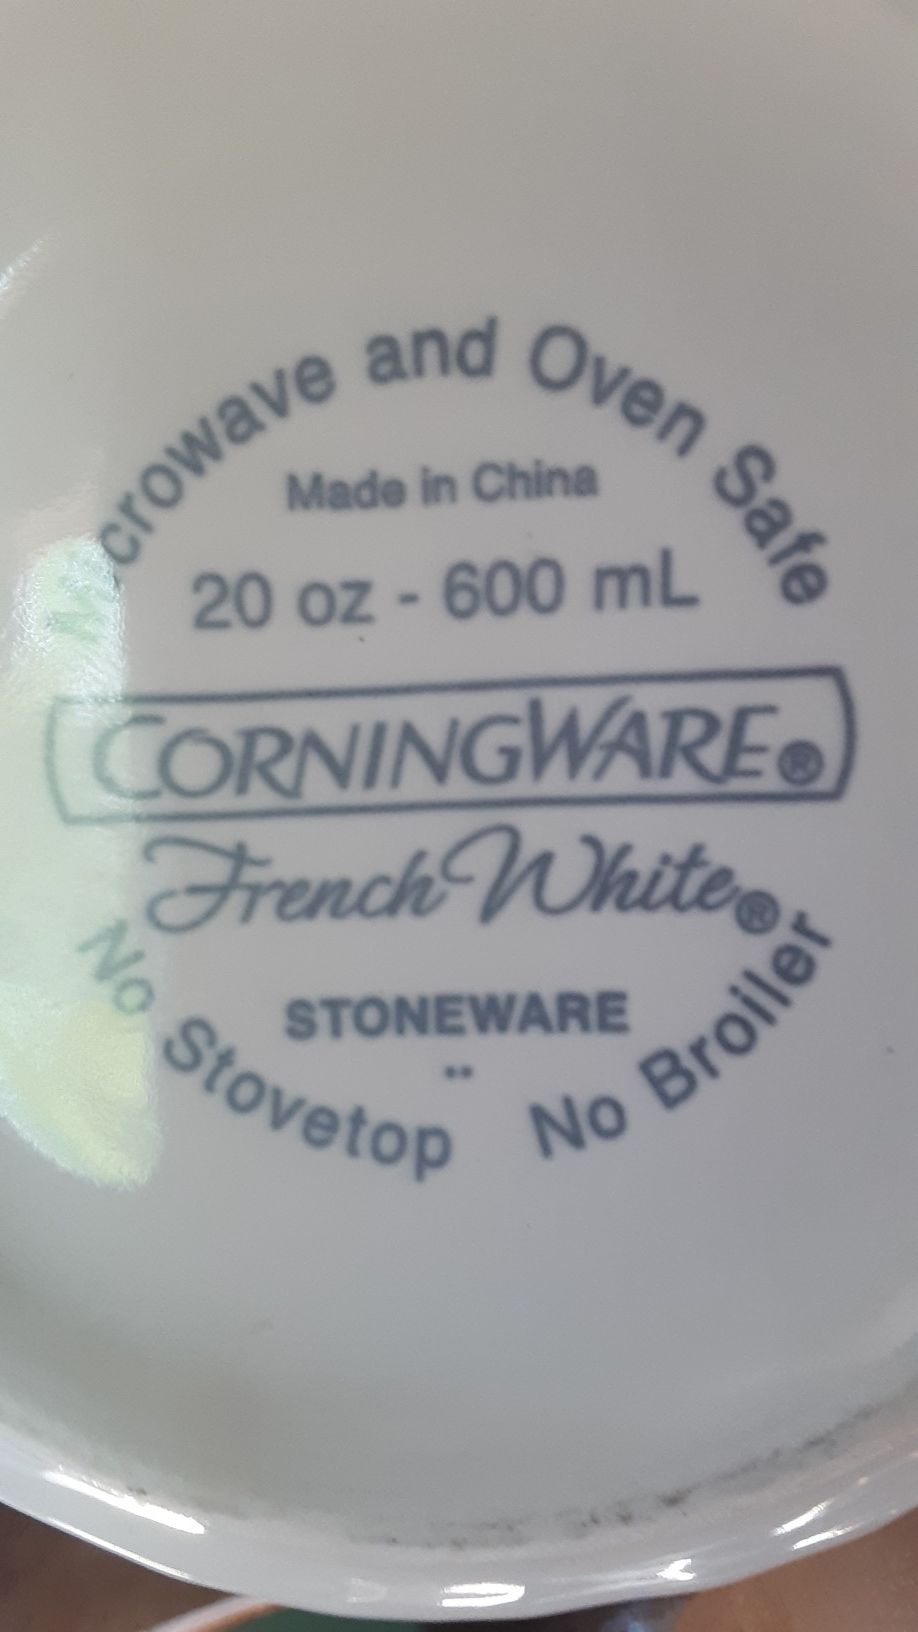 Corning Ware Stoneware!